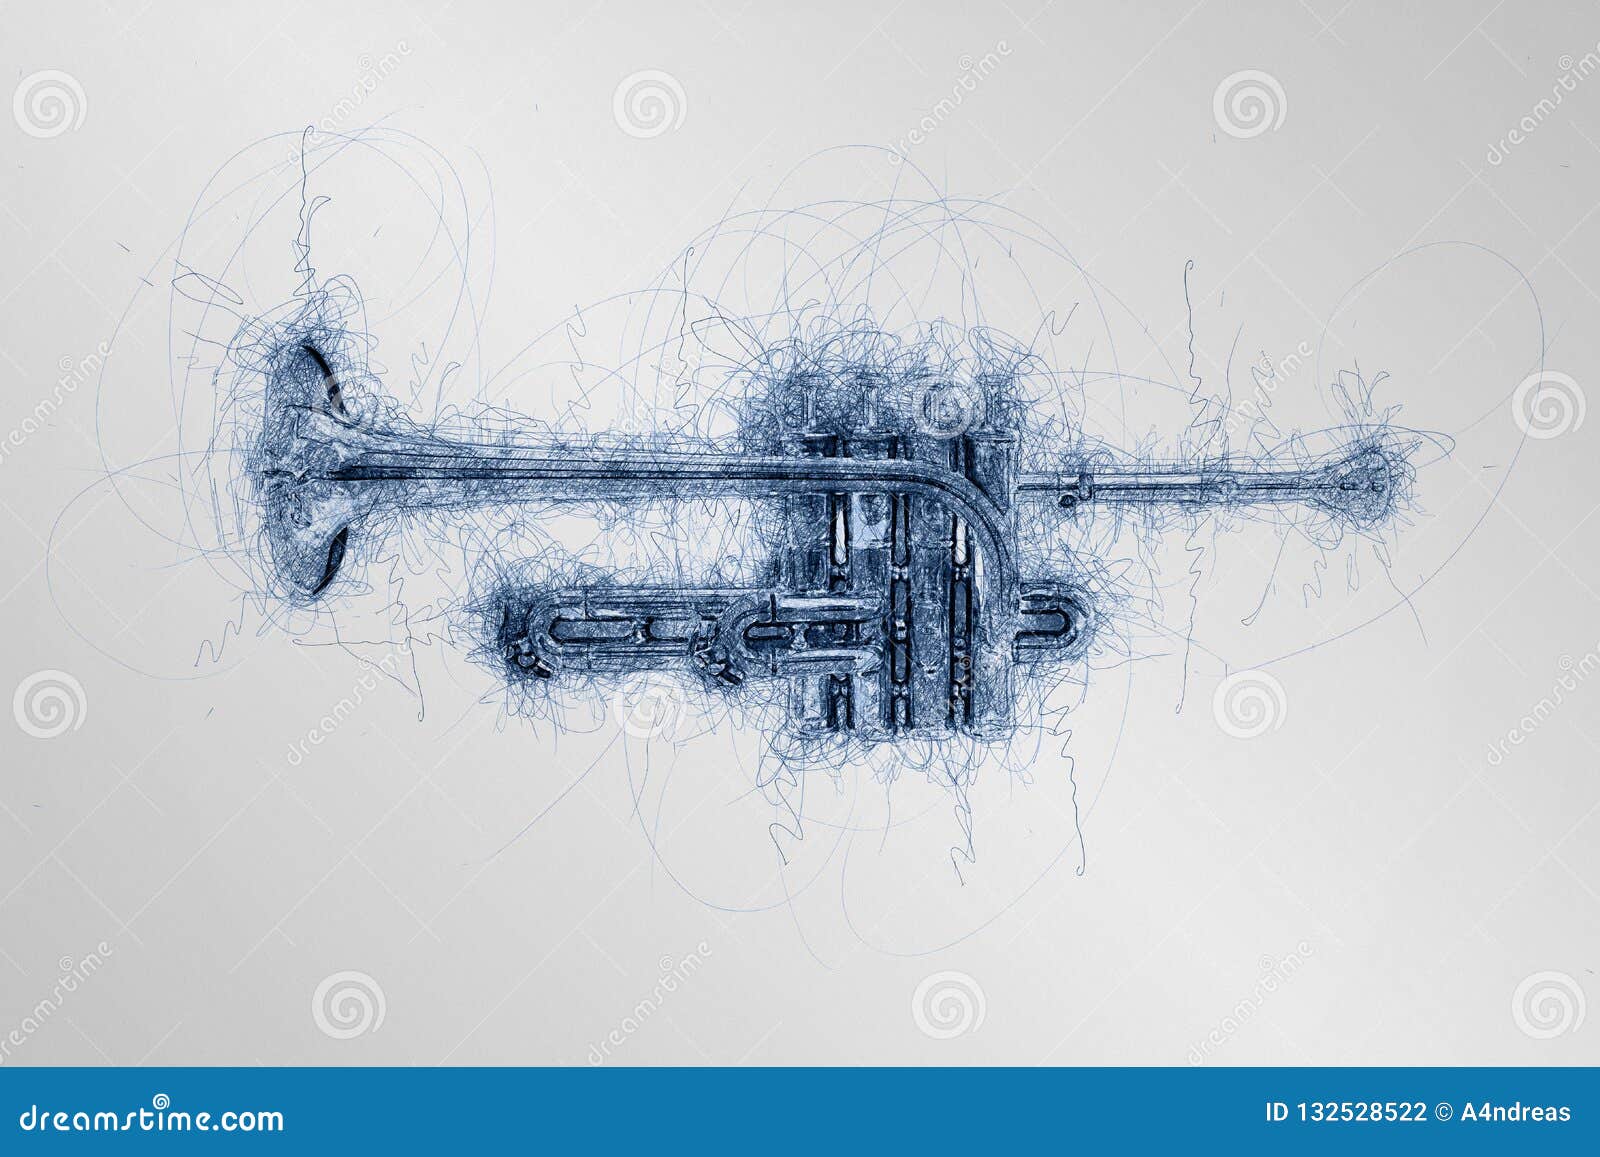 hand drawn sketch of music piccolo trumpet